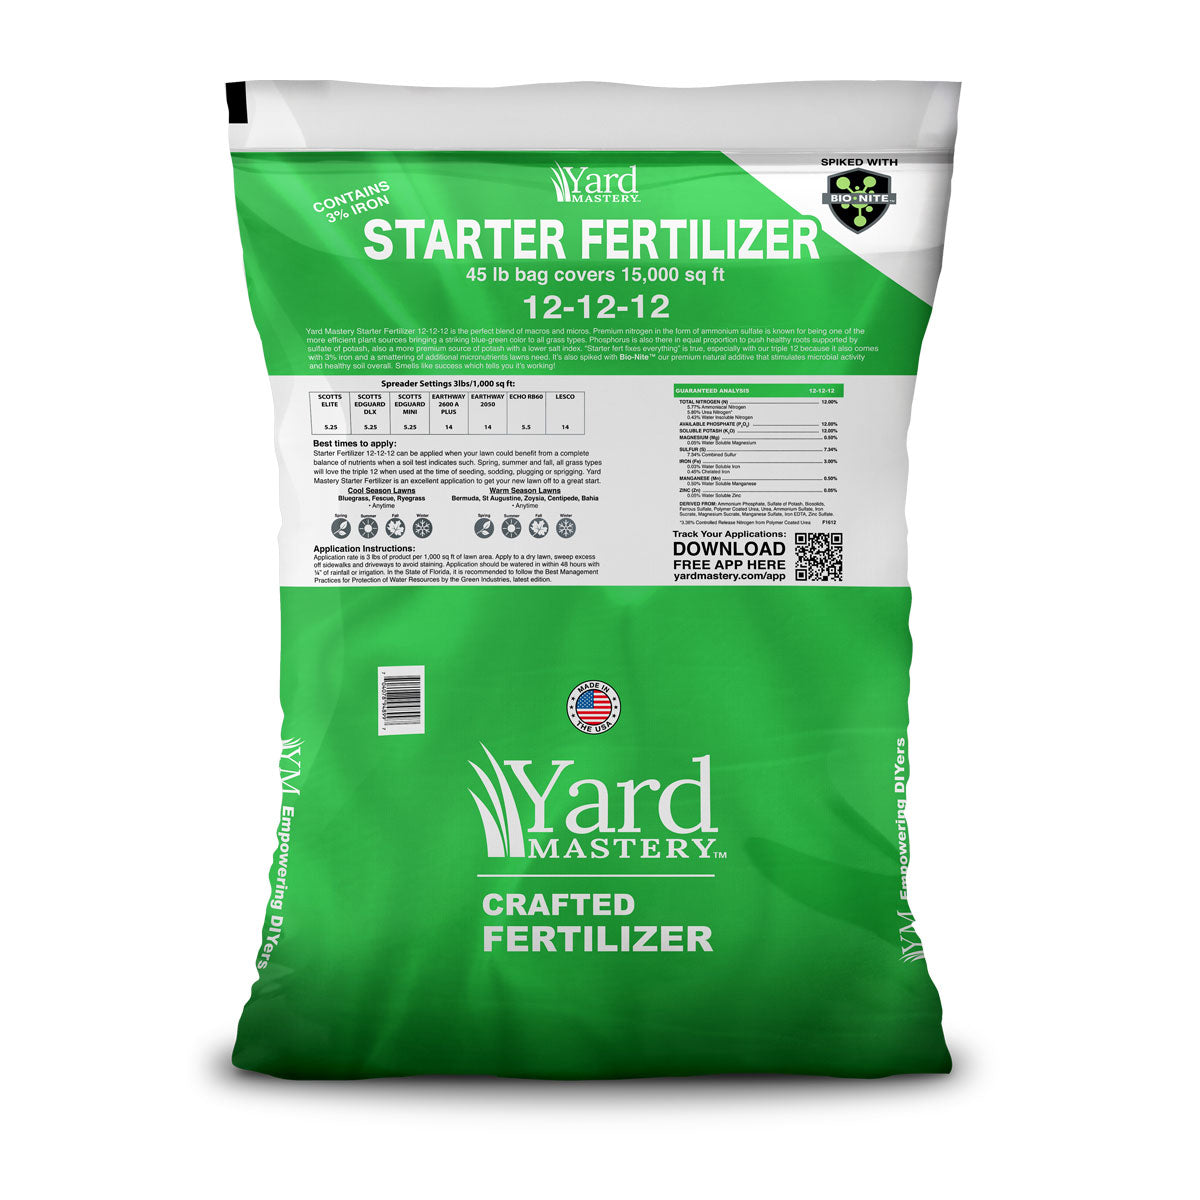 12-12-12 Starter Fertilizer 3% Iron - Bio-Nite - Granular Lawn Fertilizer